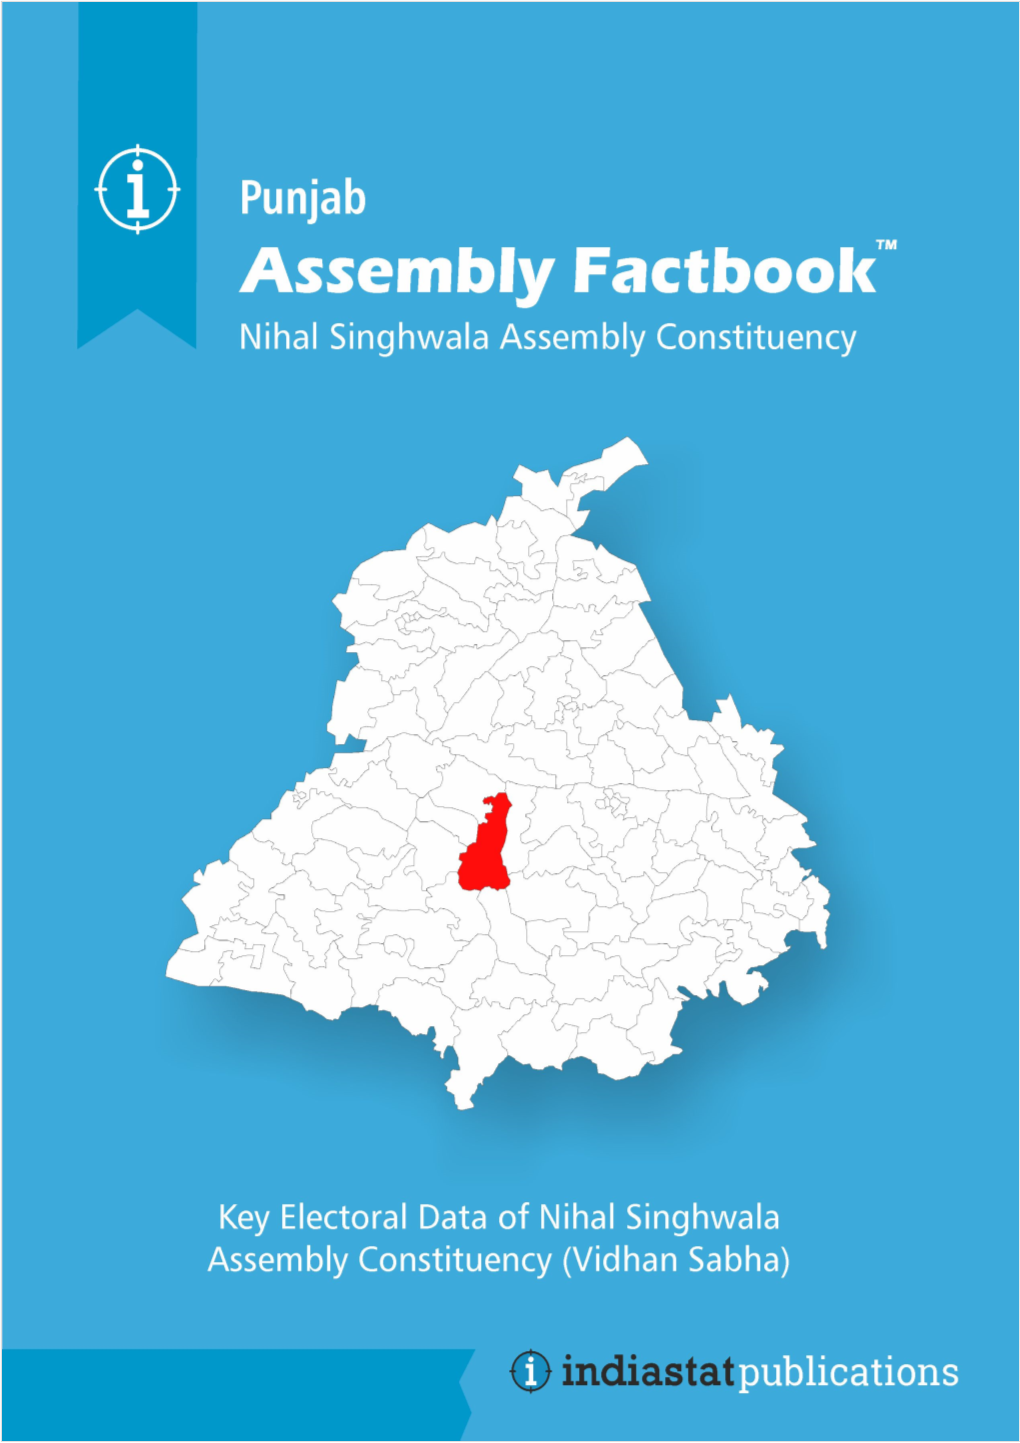 Nihal Singhwala Assembly Punjab Factbook